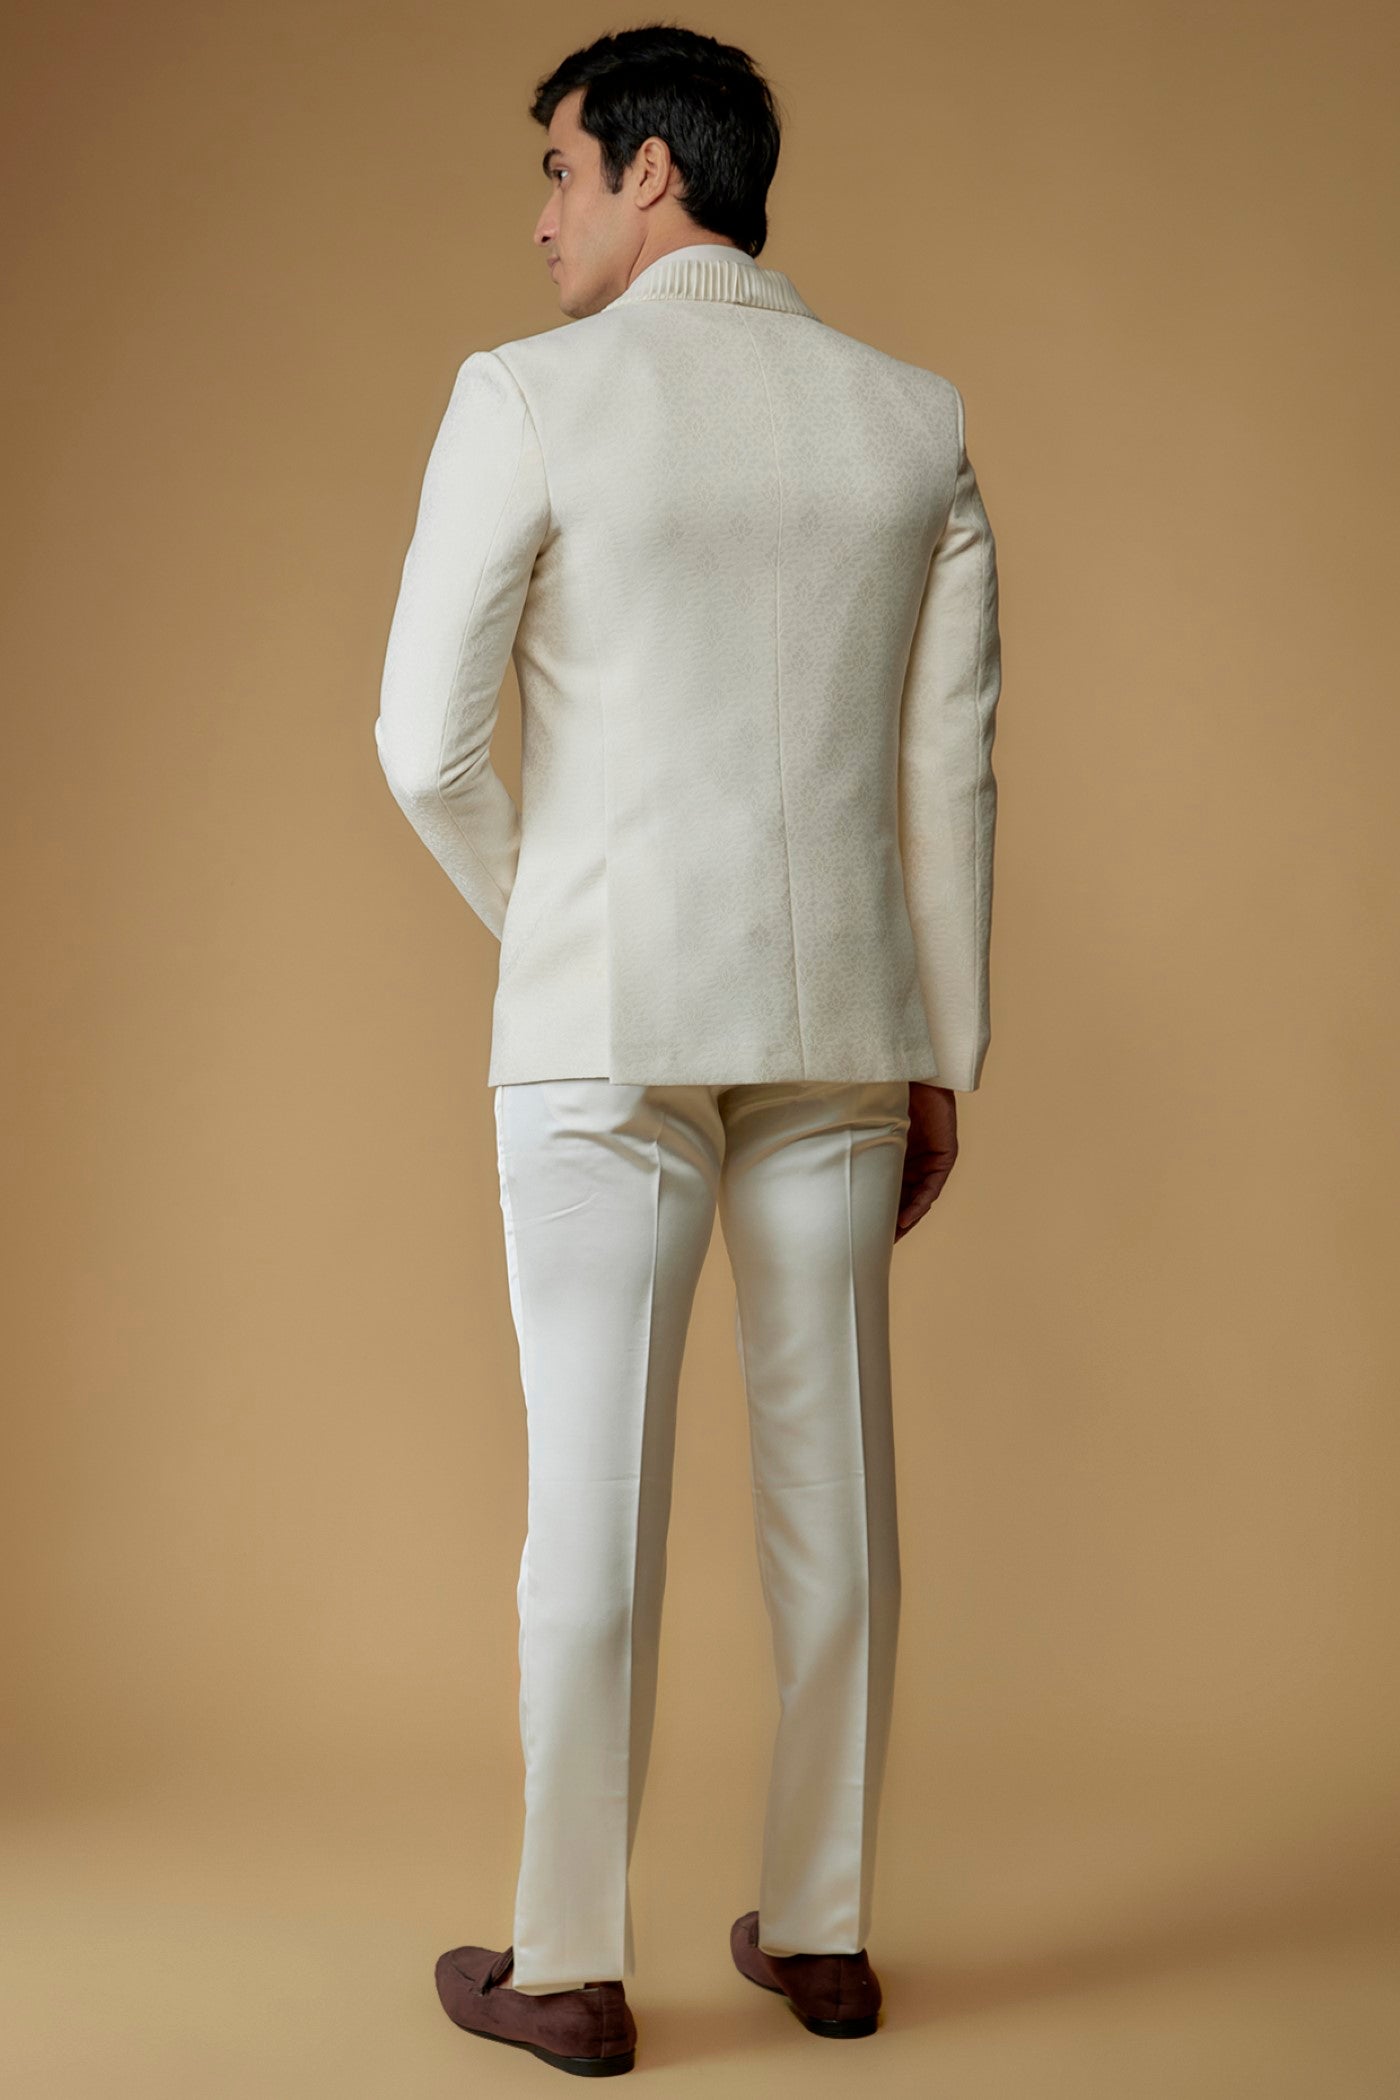 Lace White Italian Jacquard Tuxedo Set